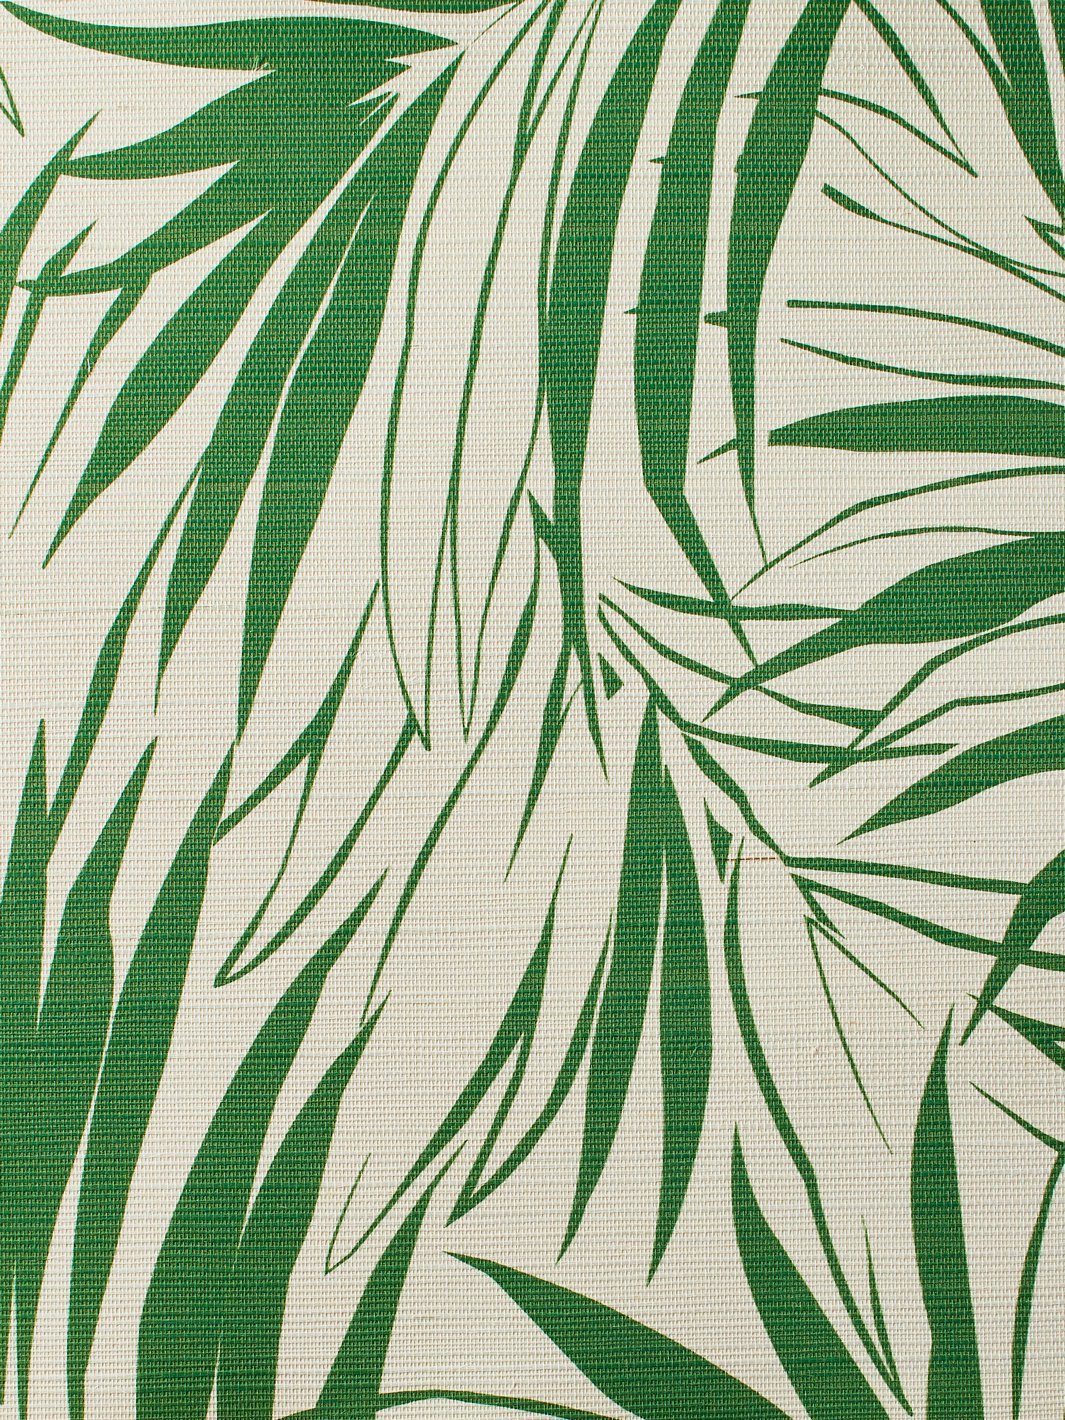 'Majesty Palm' Grasscloth' Wallpaper by Wallshoppe - Green